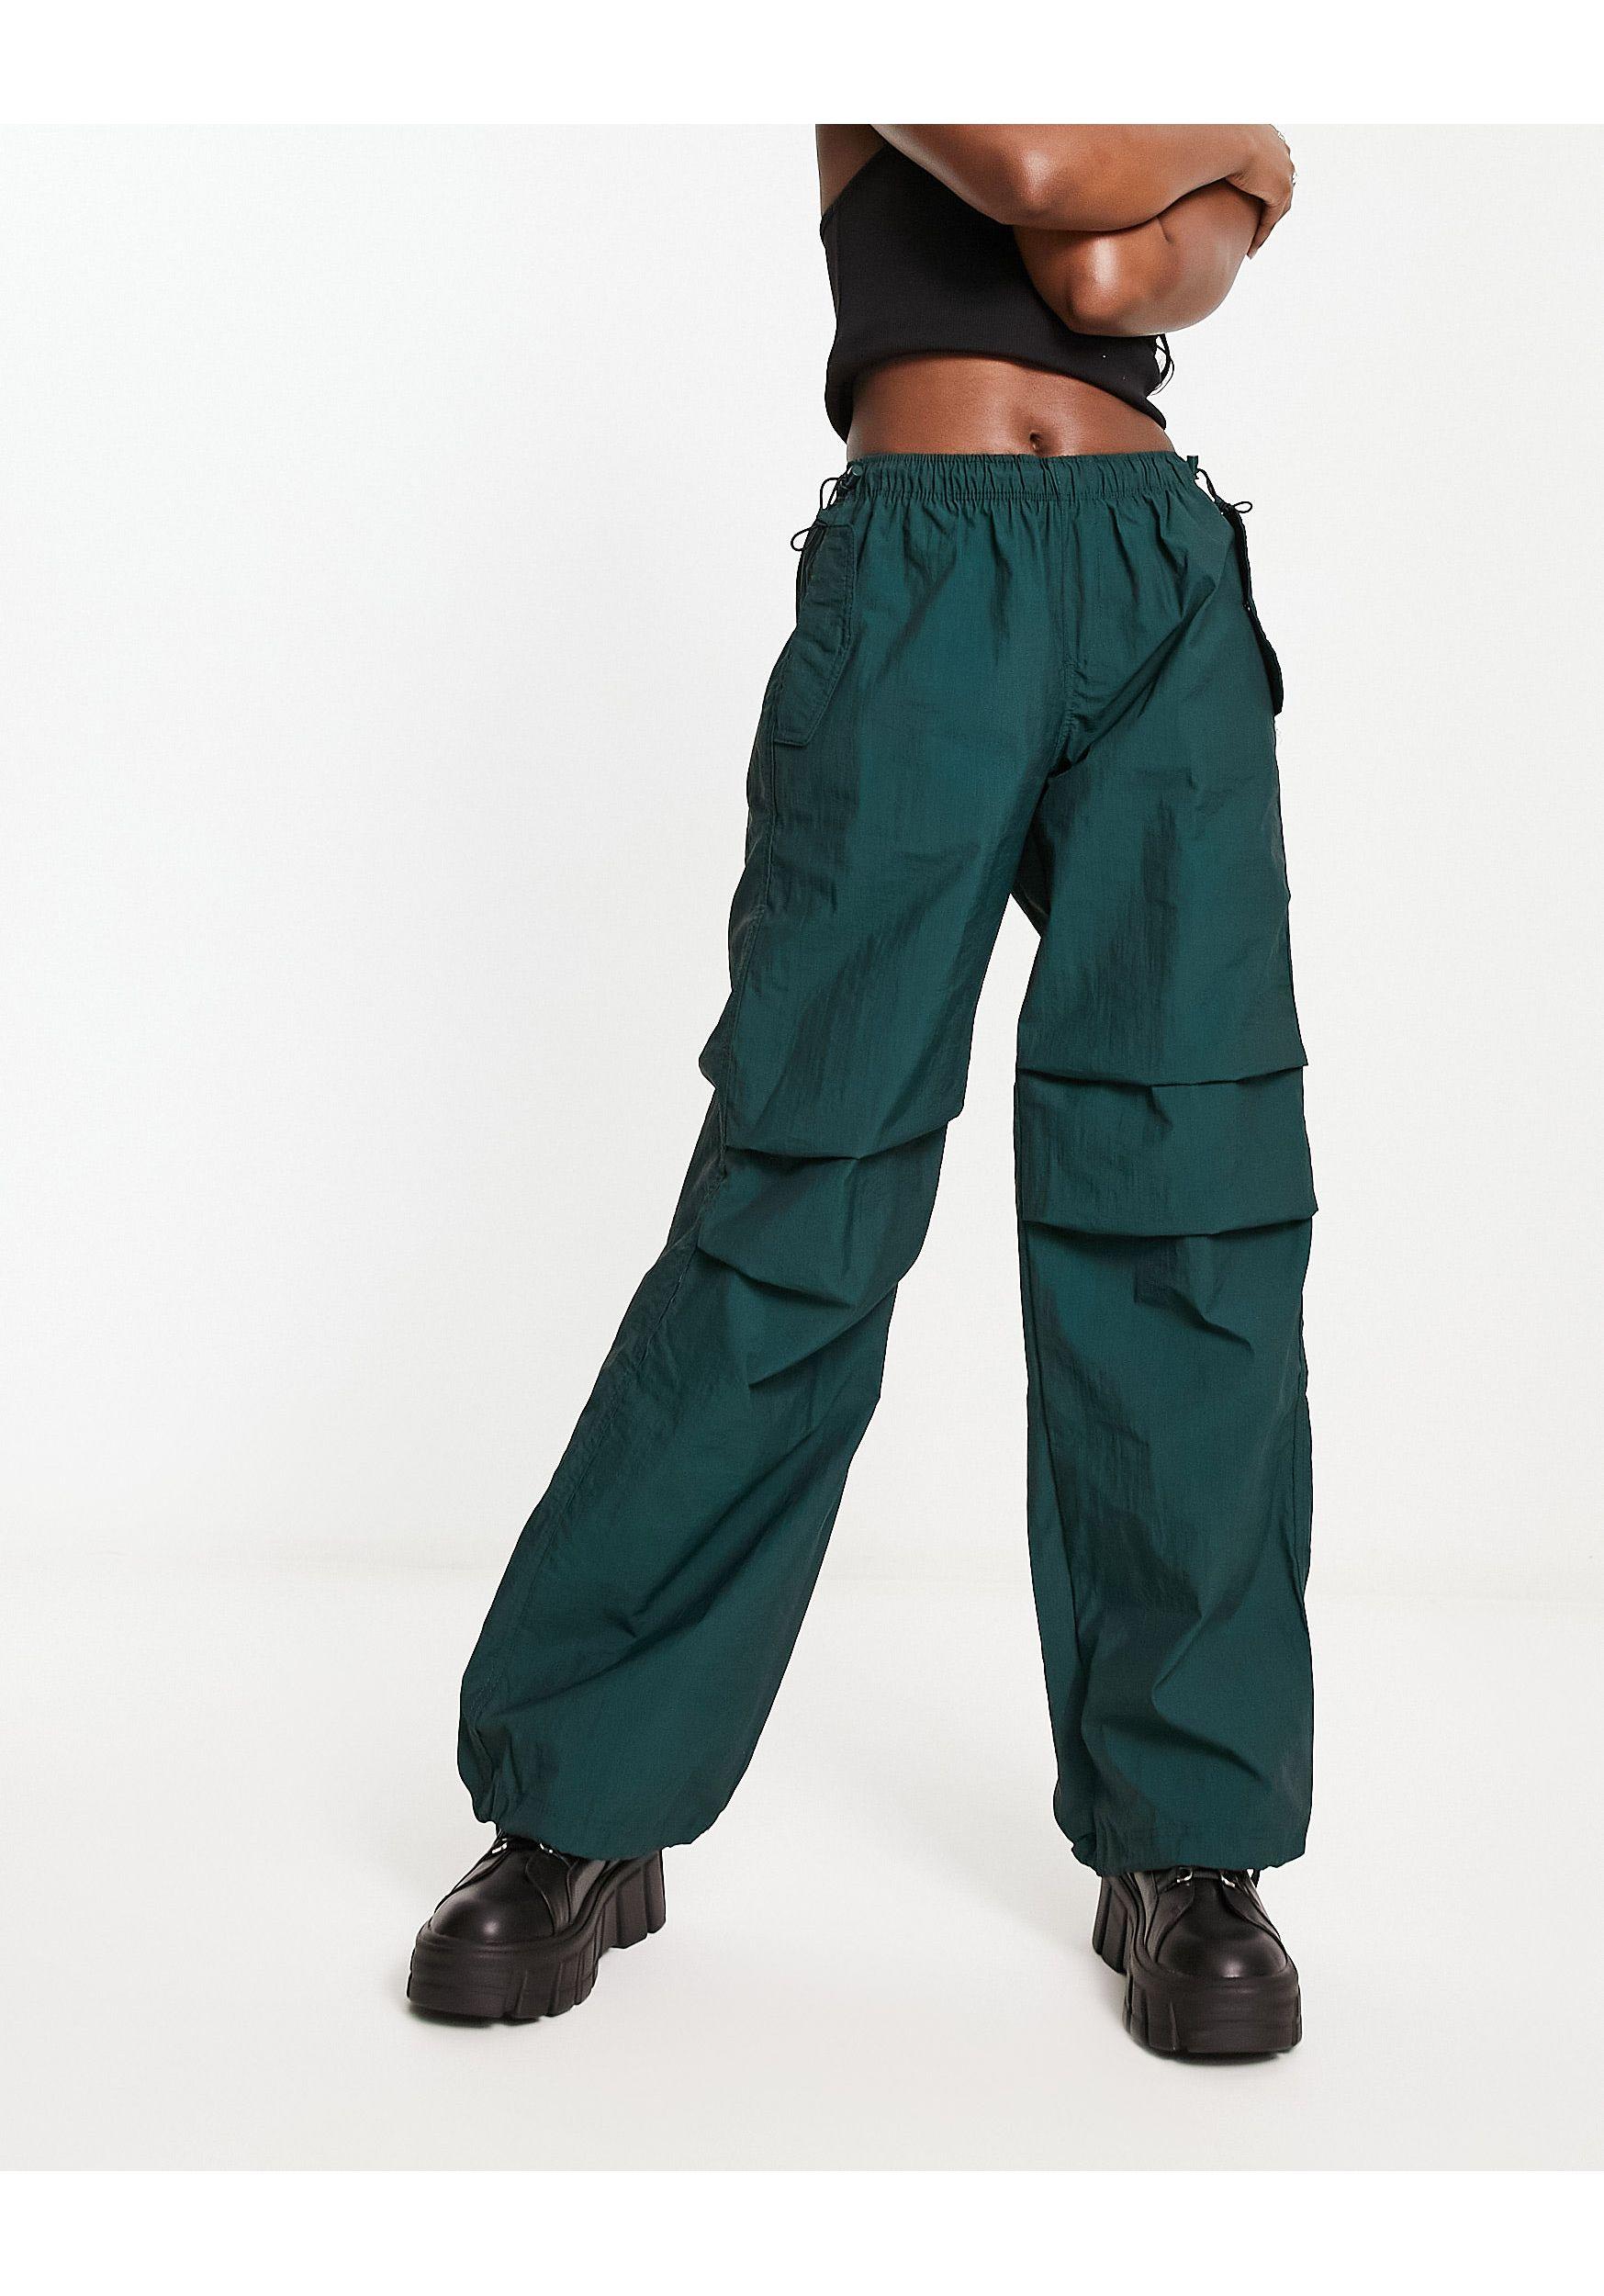 Bershka Nylon Parachute Pants in Green | Lyst Canada